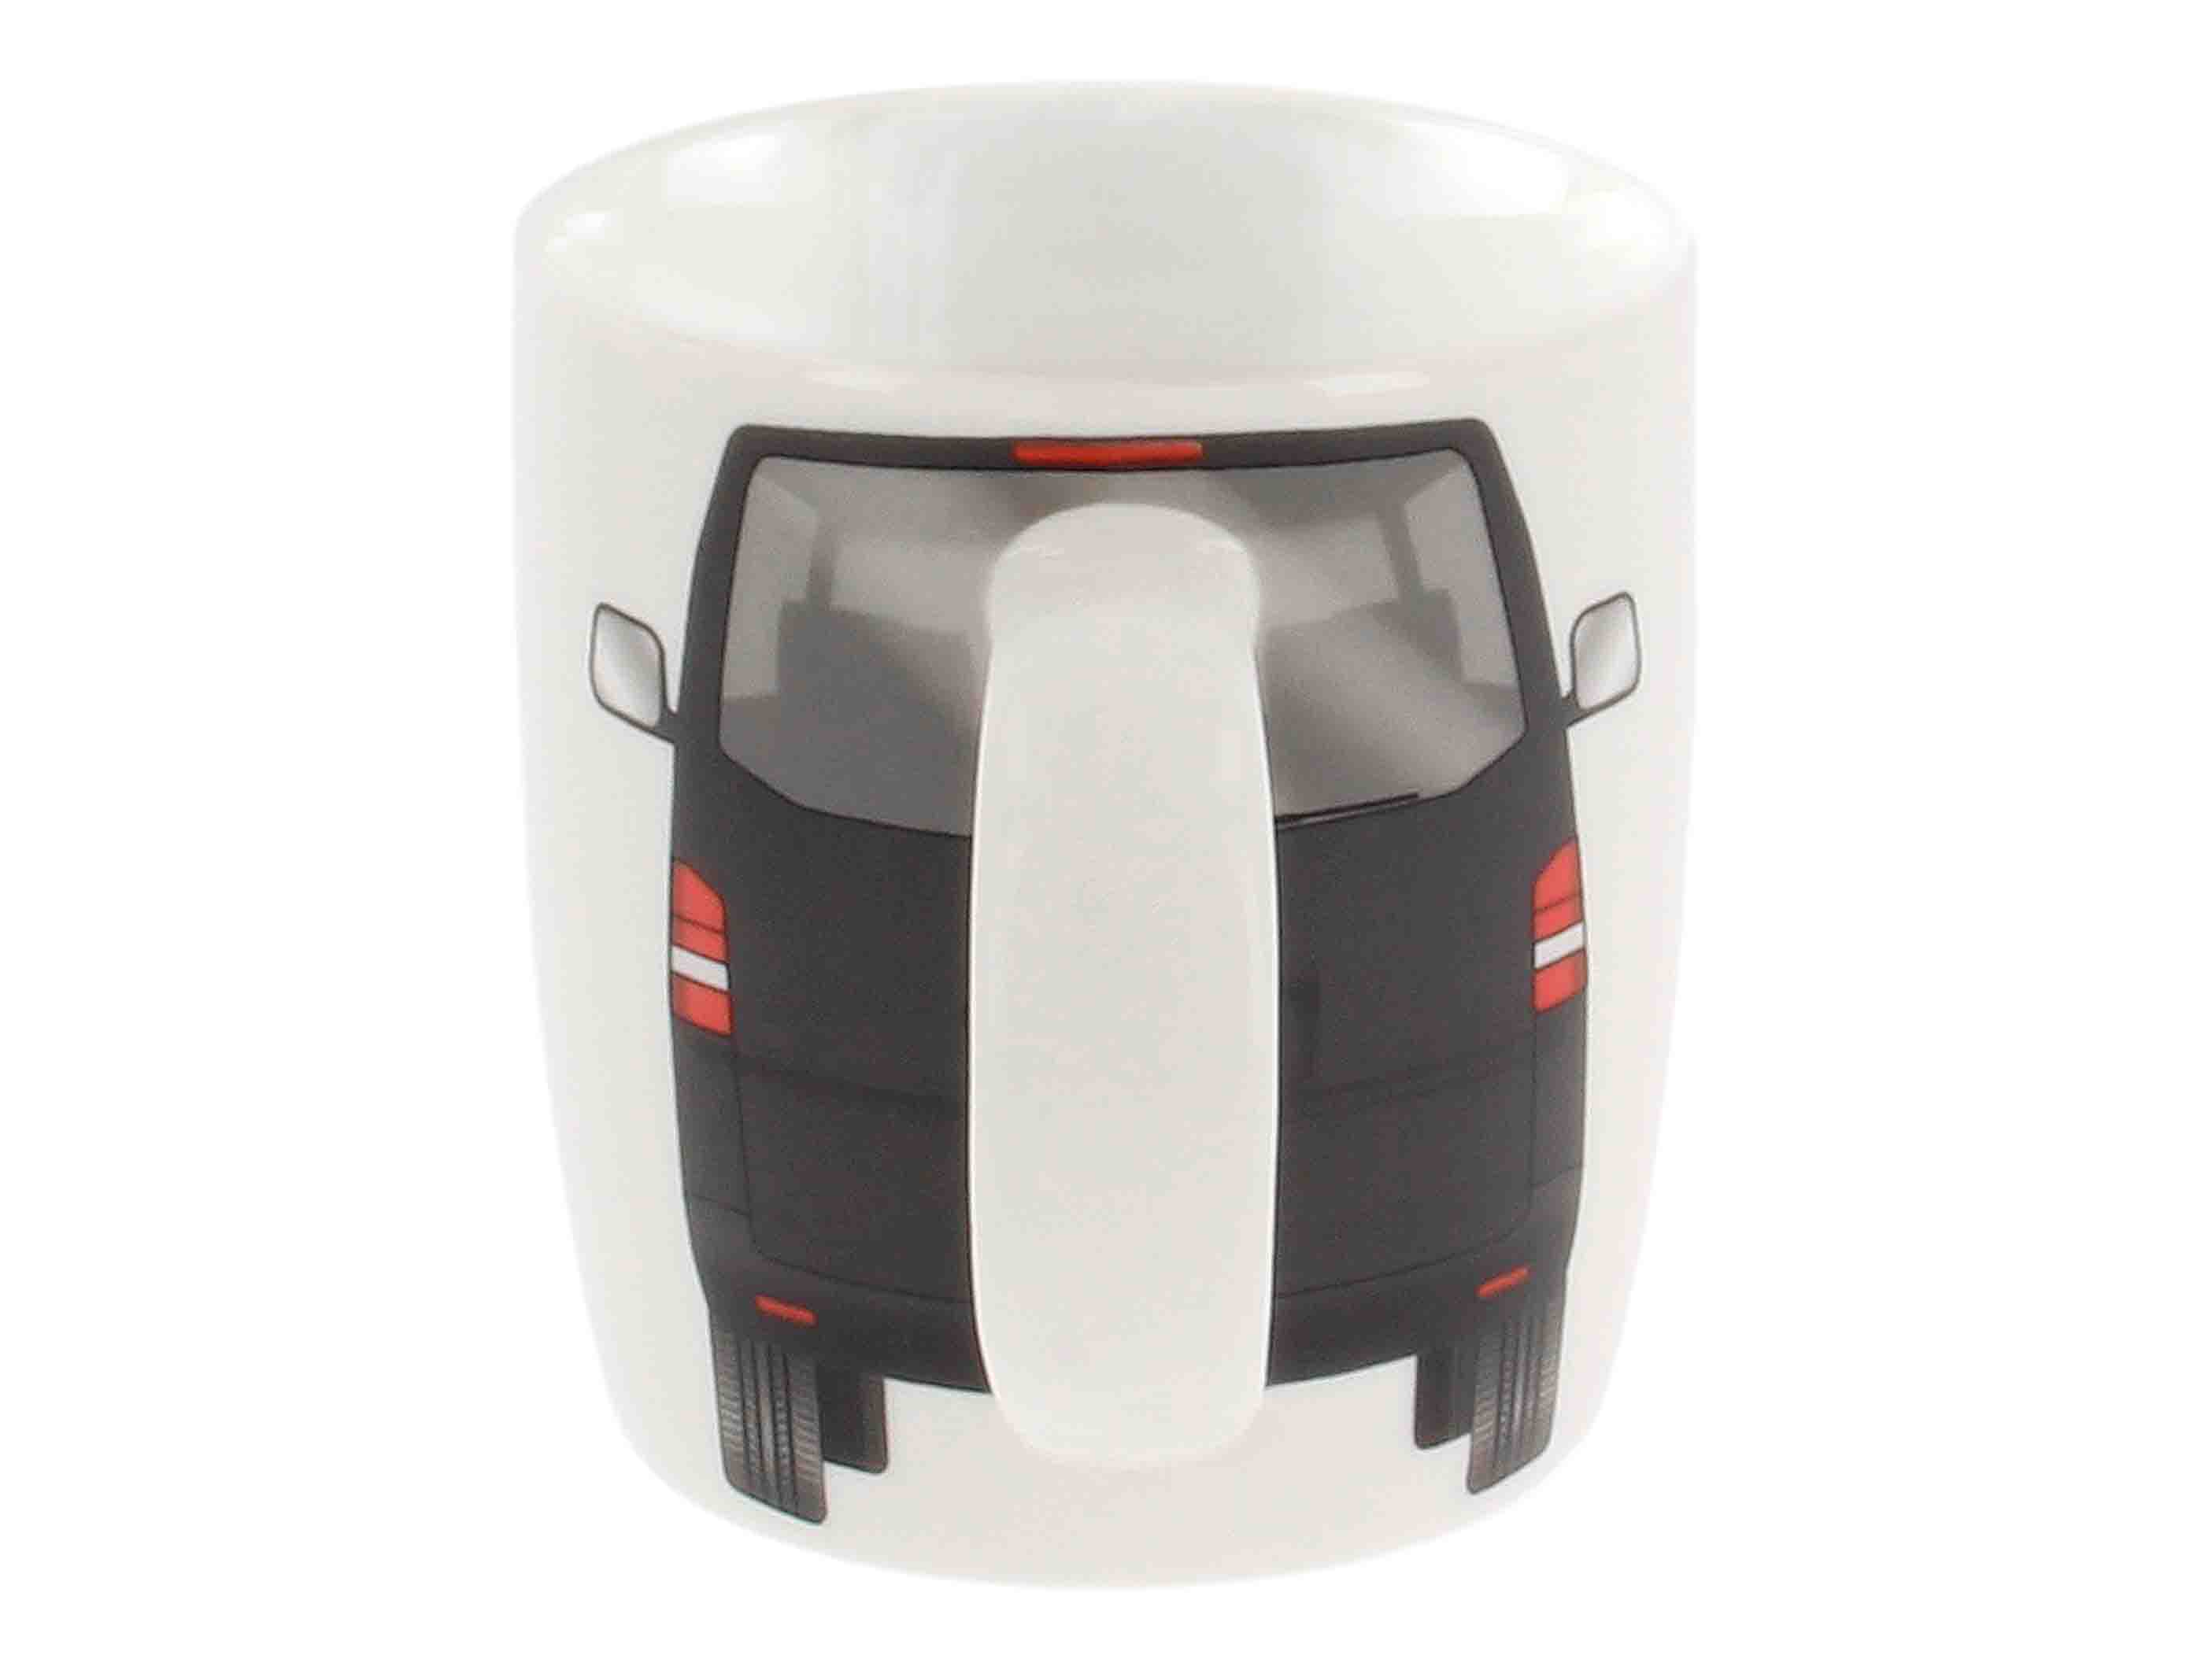 VW T5 Bulli Bus coffee cup 370ml